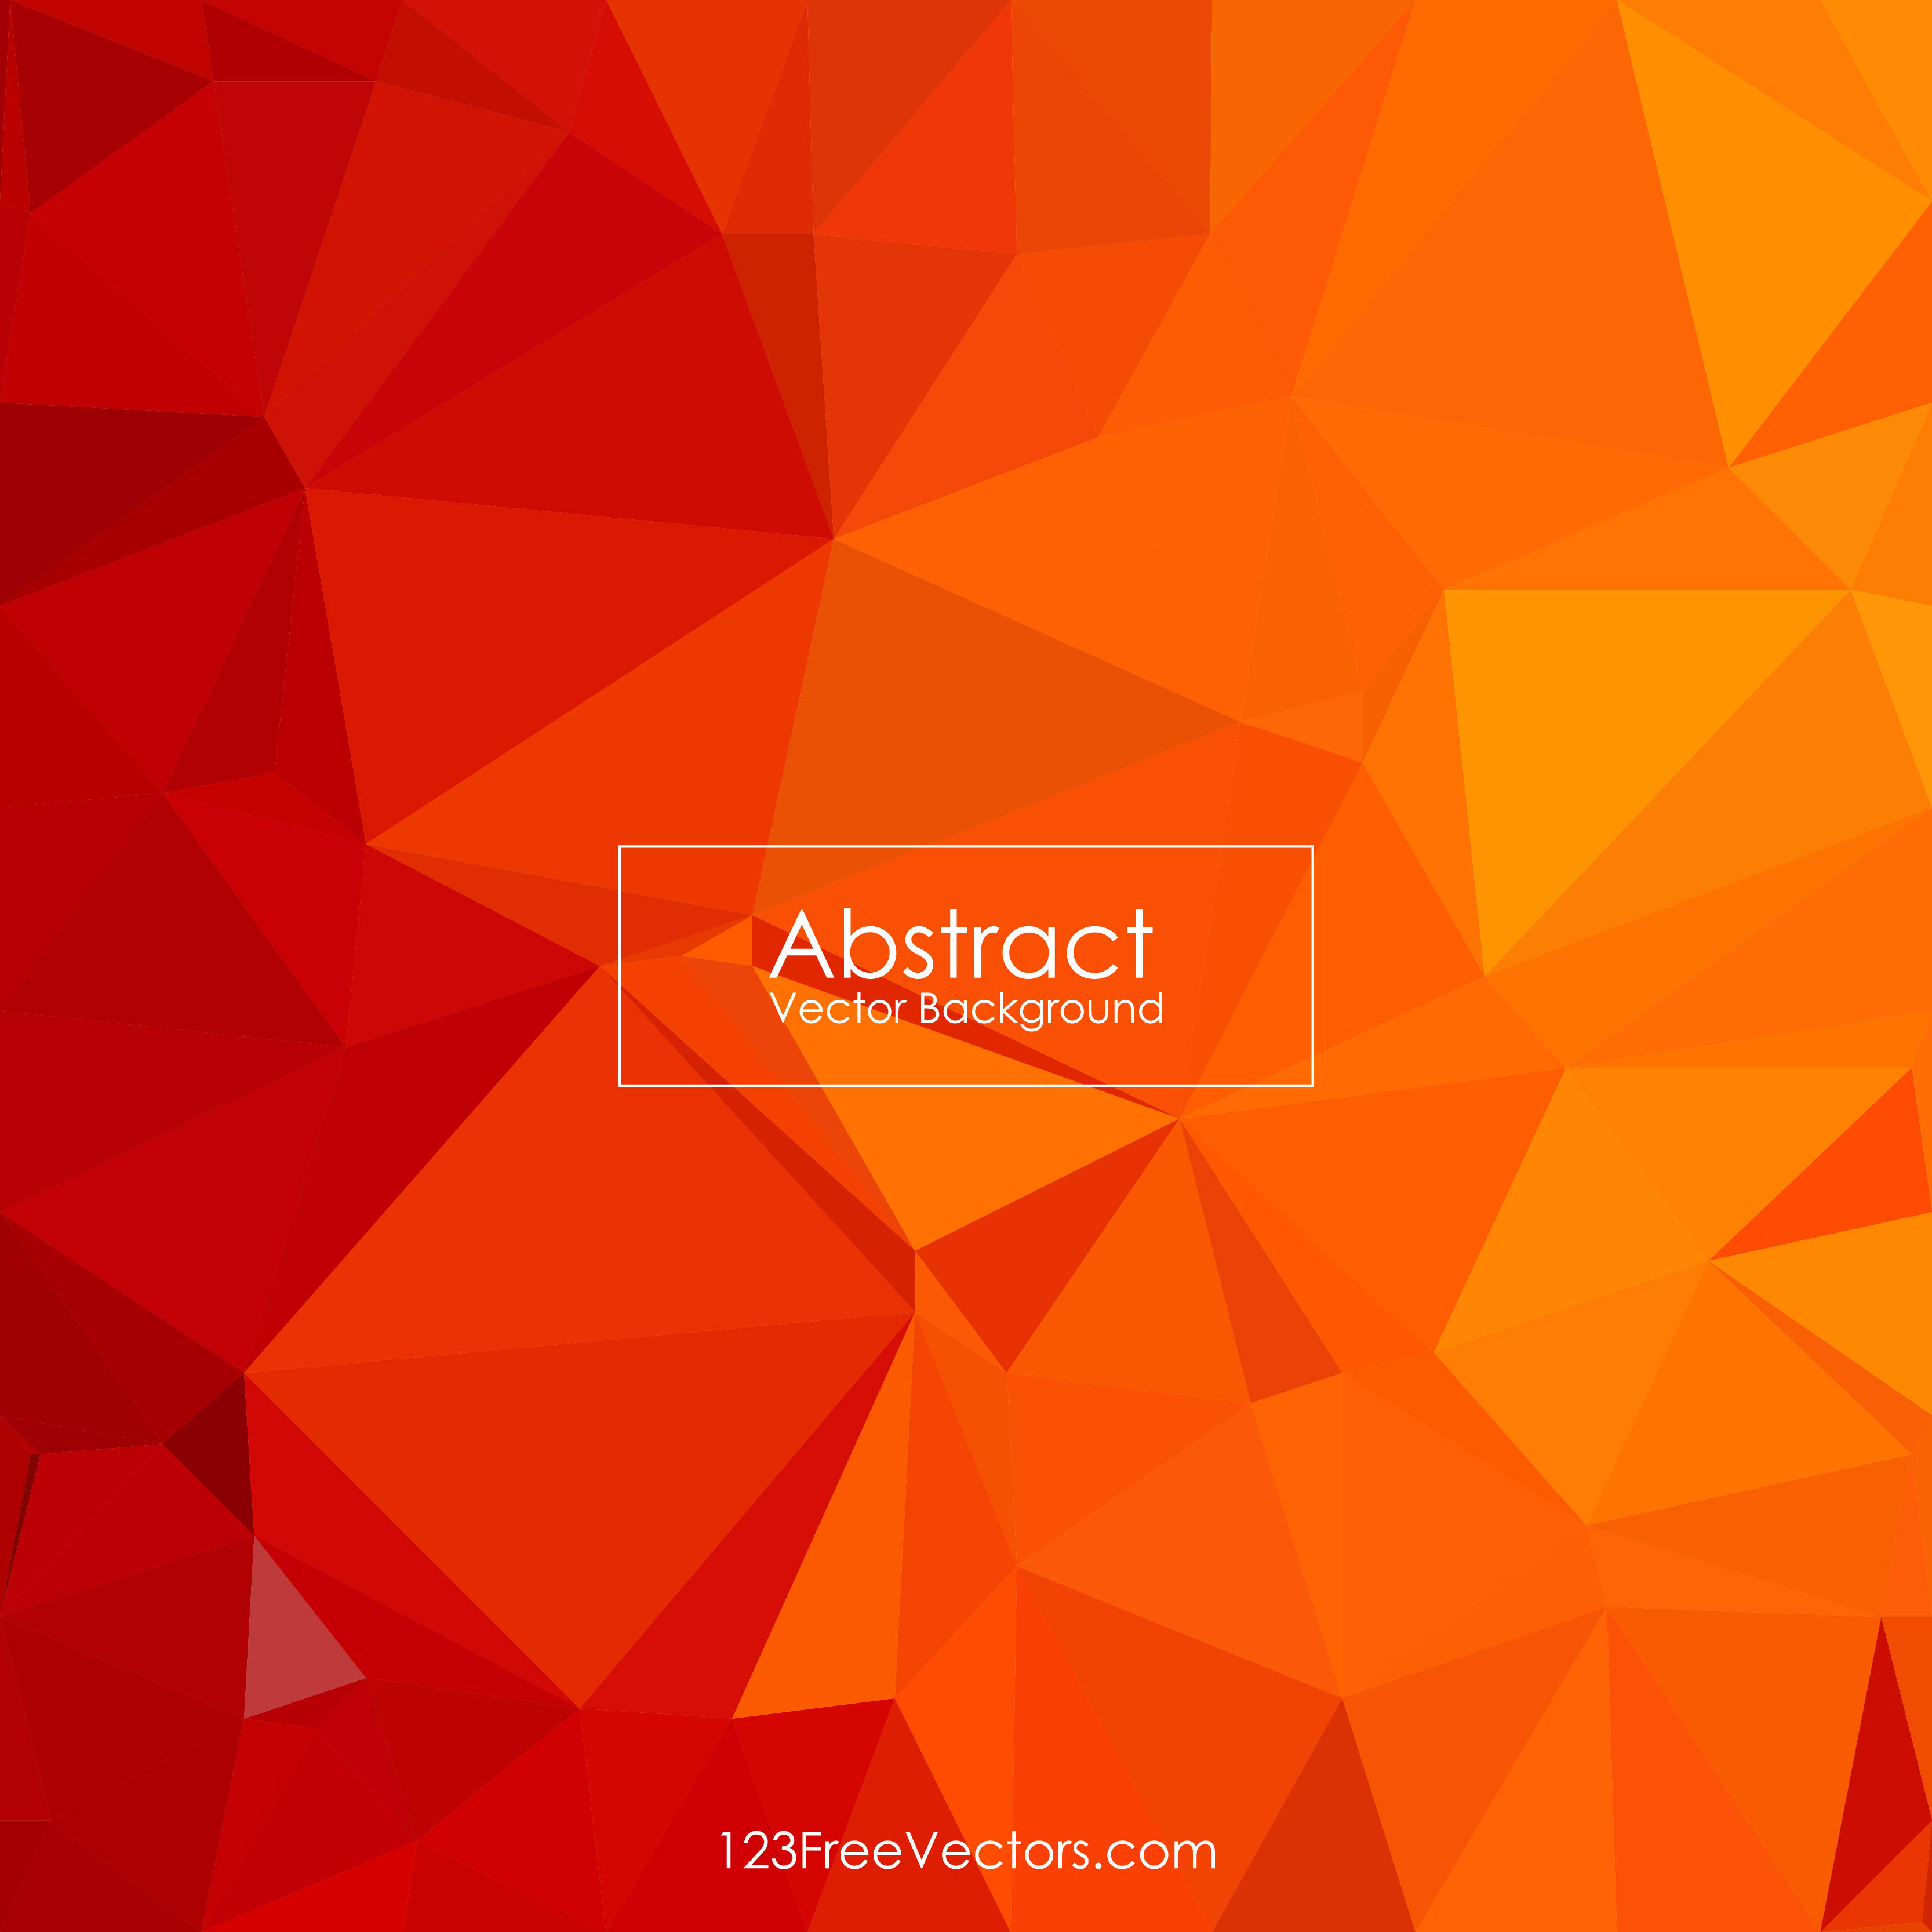 Free download Abstract Background Design in Illustrator [1280x720] for your  Desktop, Mobile & Tablet | Explore 31+ Illustrator Backgrounds |